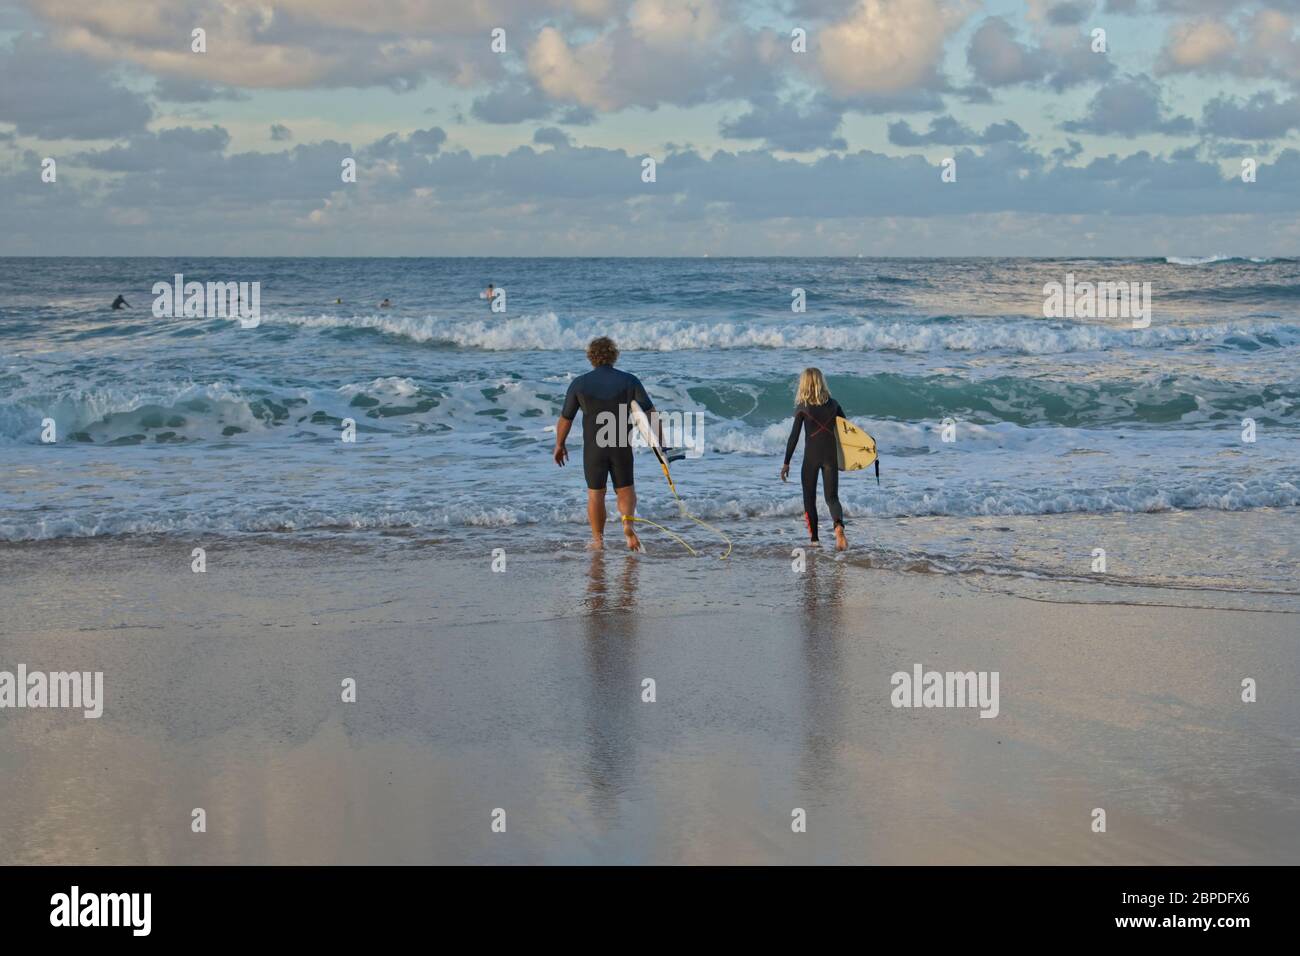 Surfer catching waves on the Sunshine Coast in Australia. Stock Photo